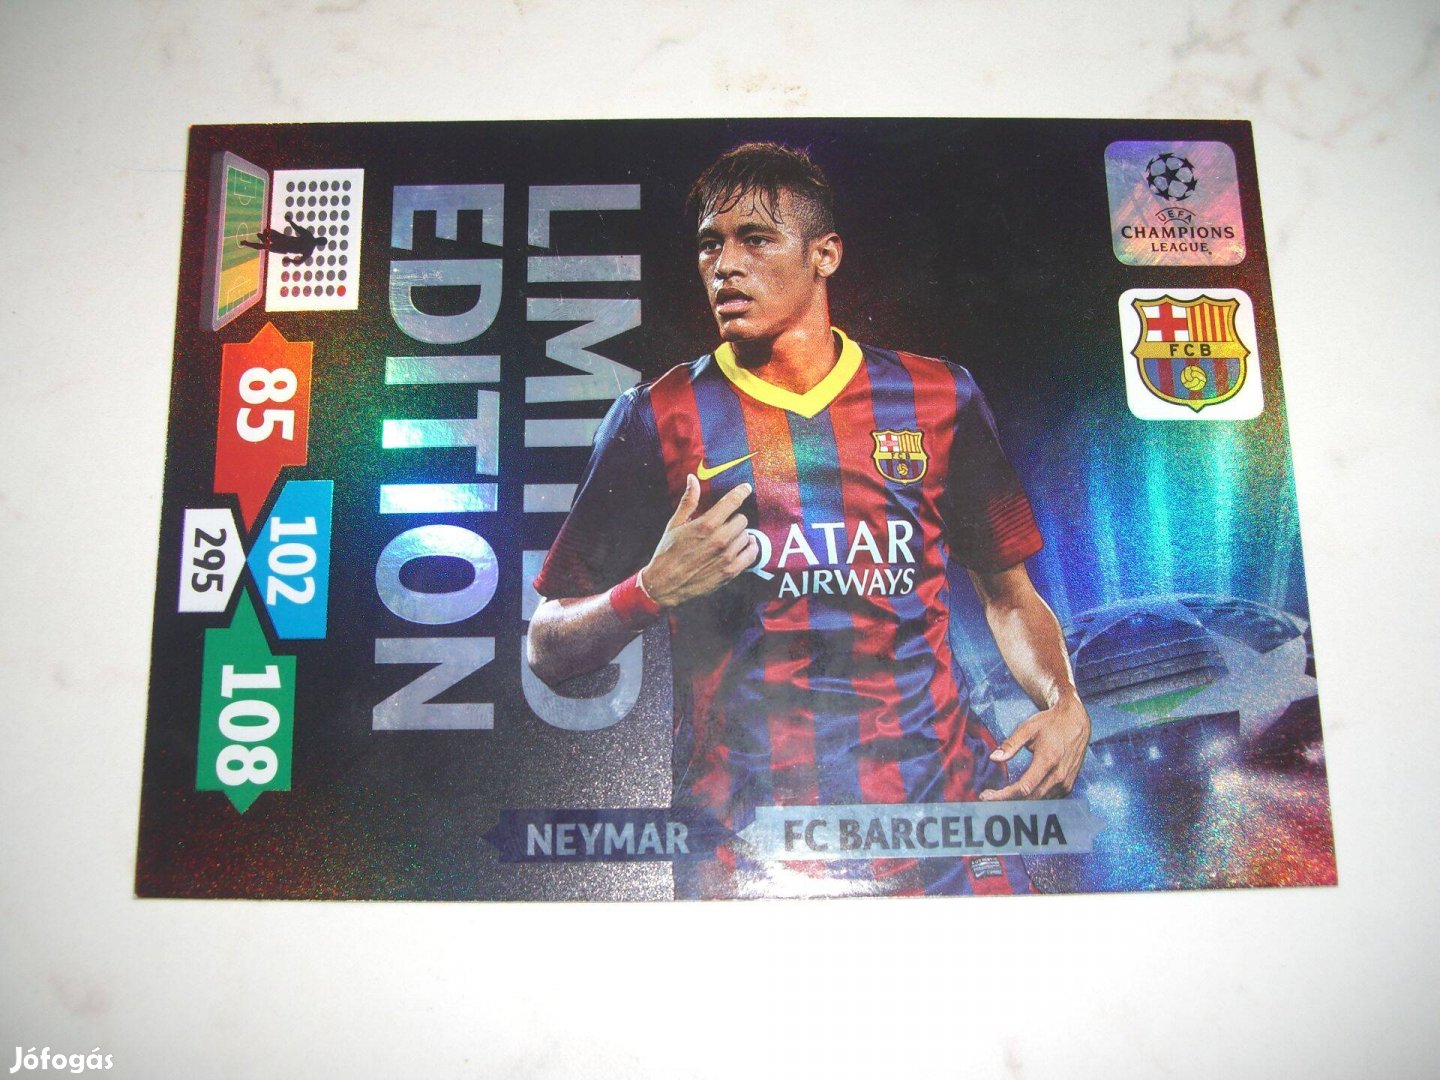 UEFA Champions League Limited Edition Neymar FC Barcelona